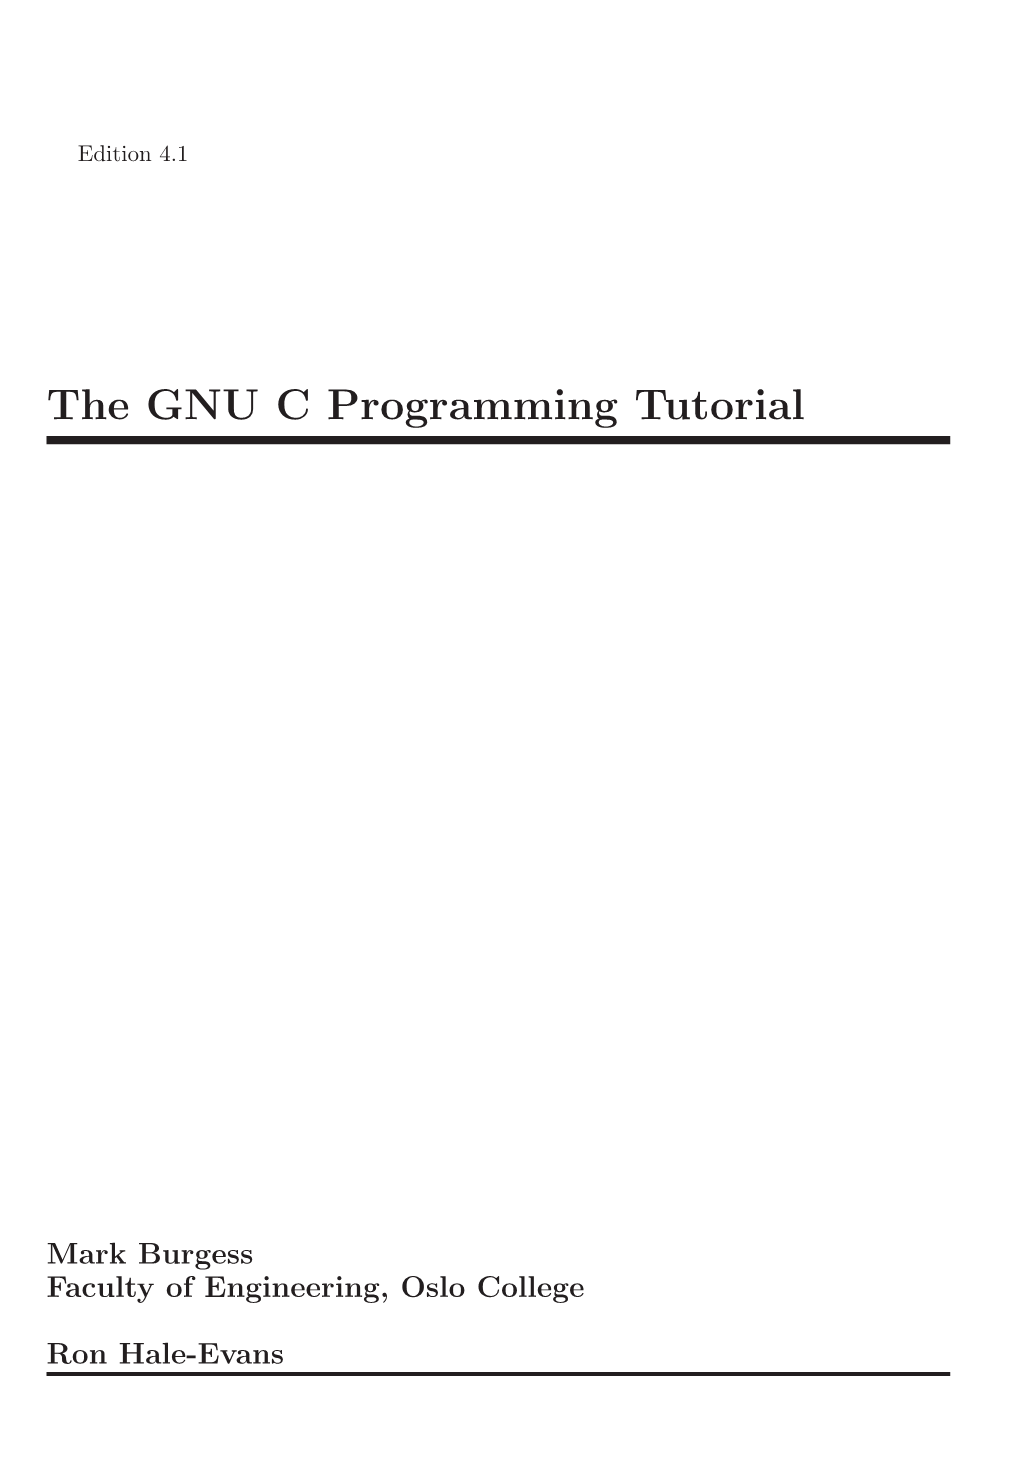 The GNU C Programming Tutorial